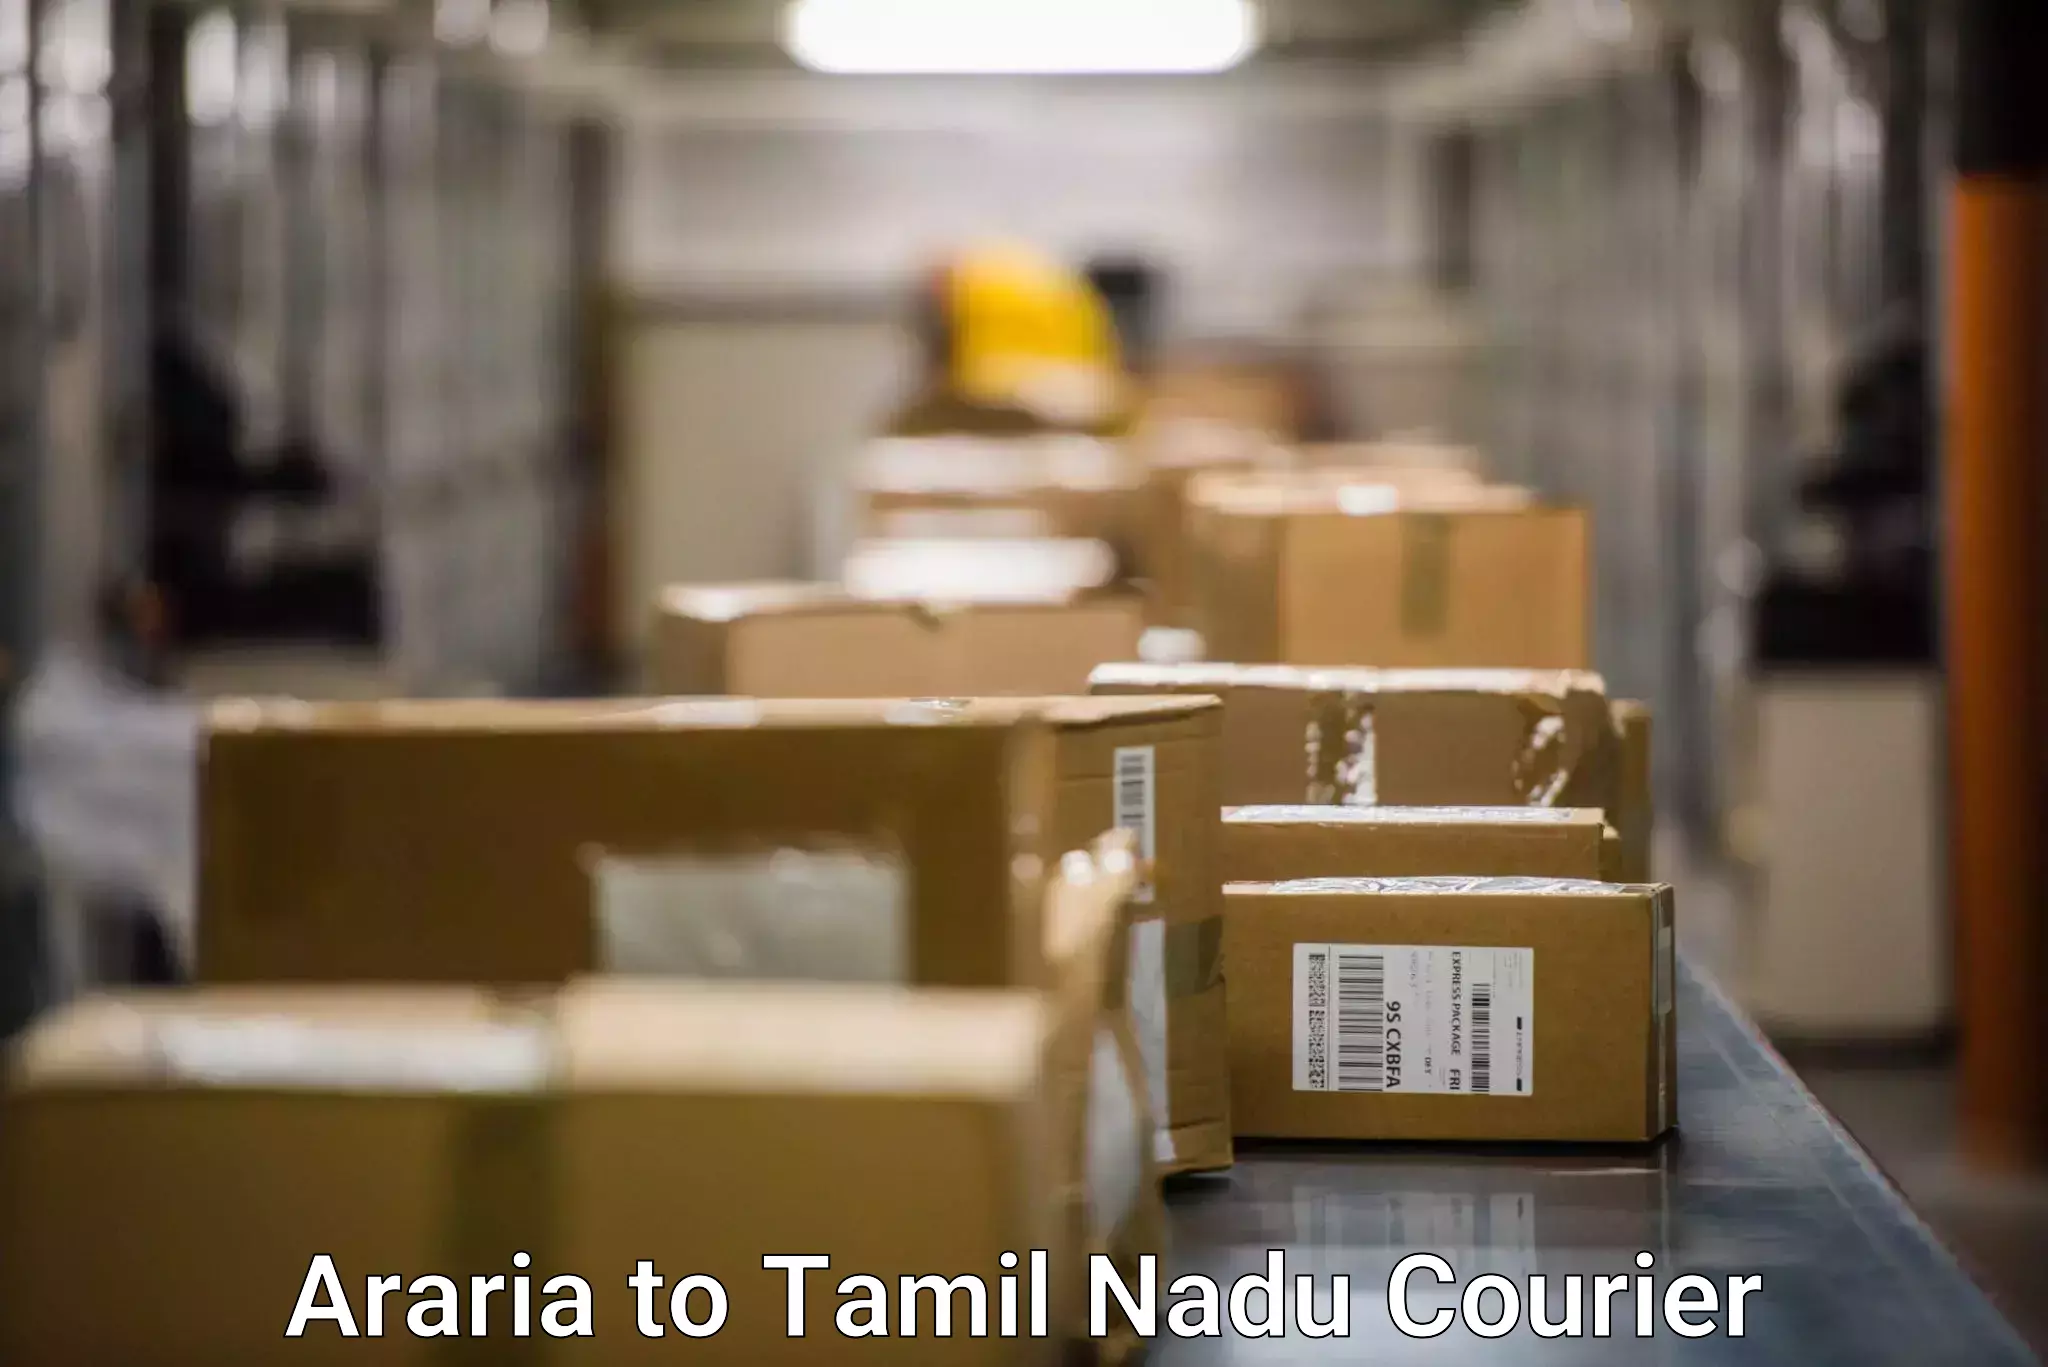 On-demand delivery Araria to Anna University Chennai